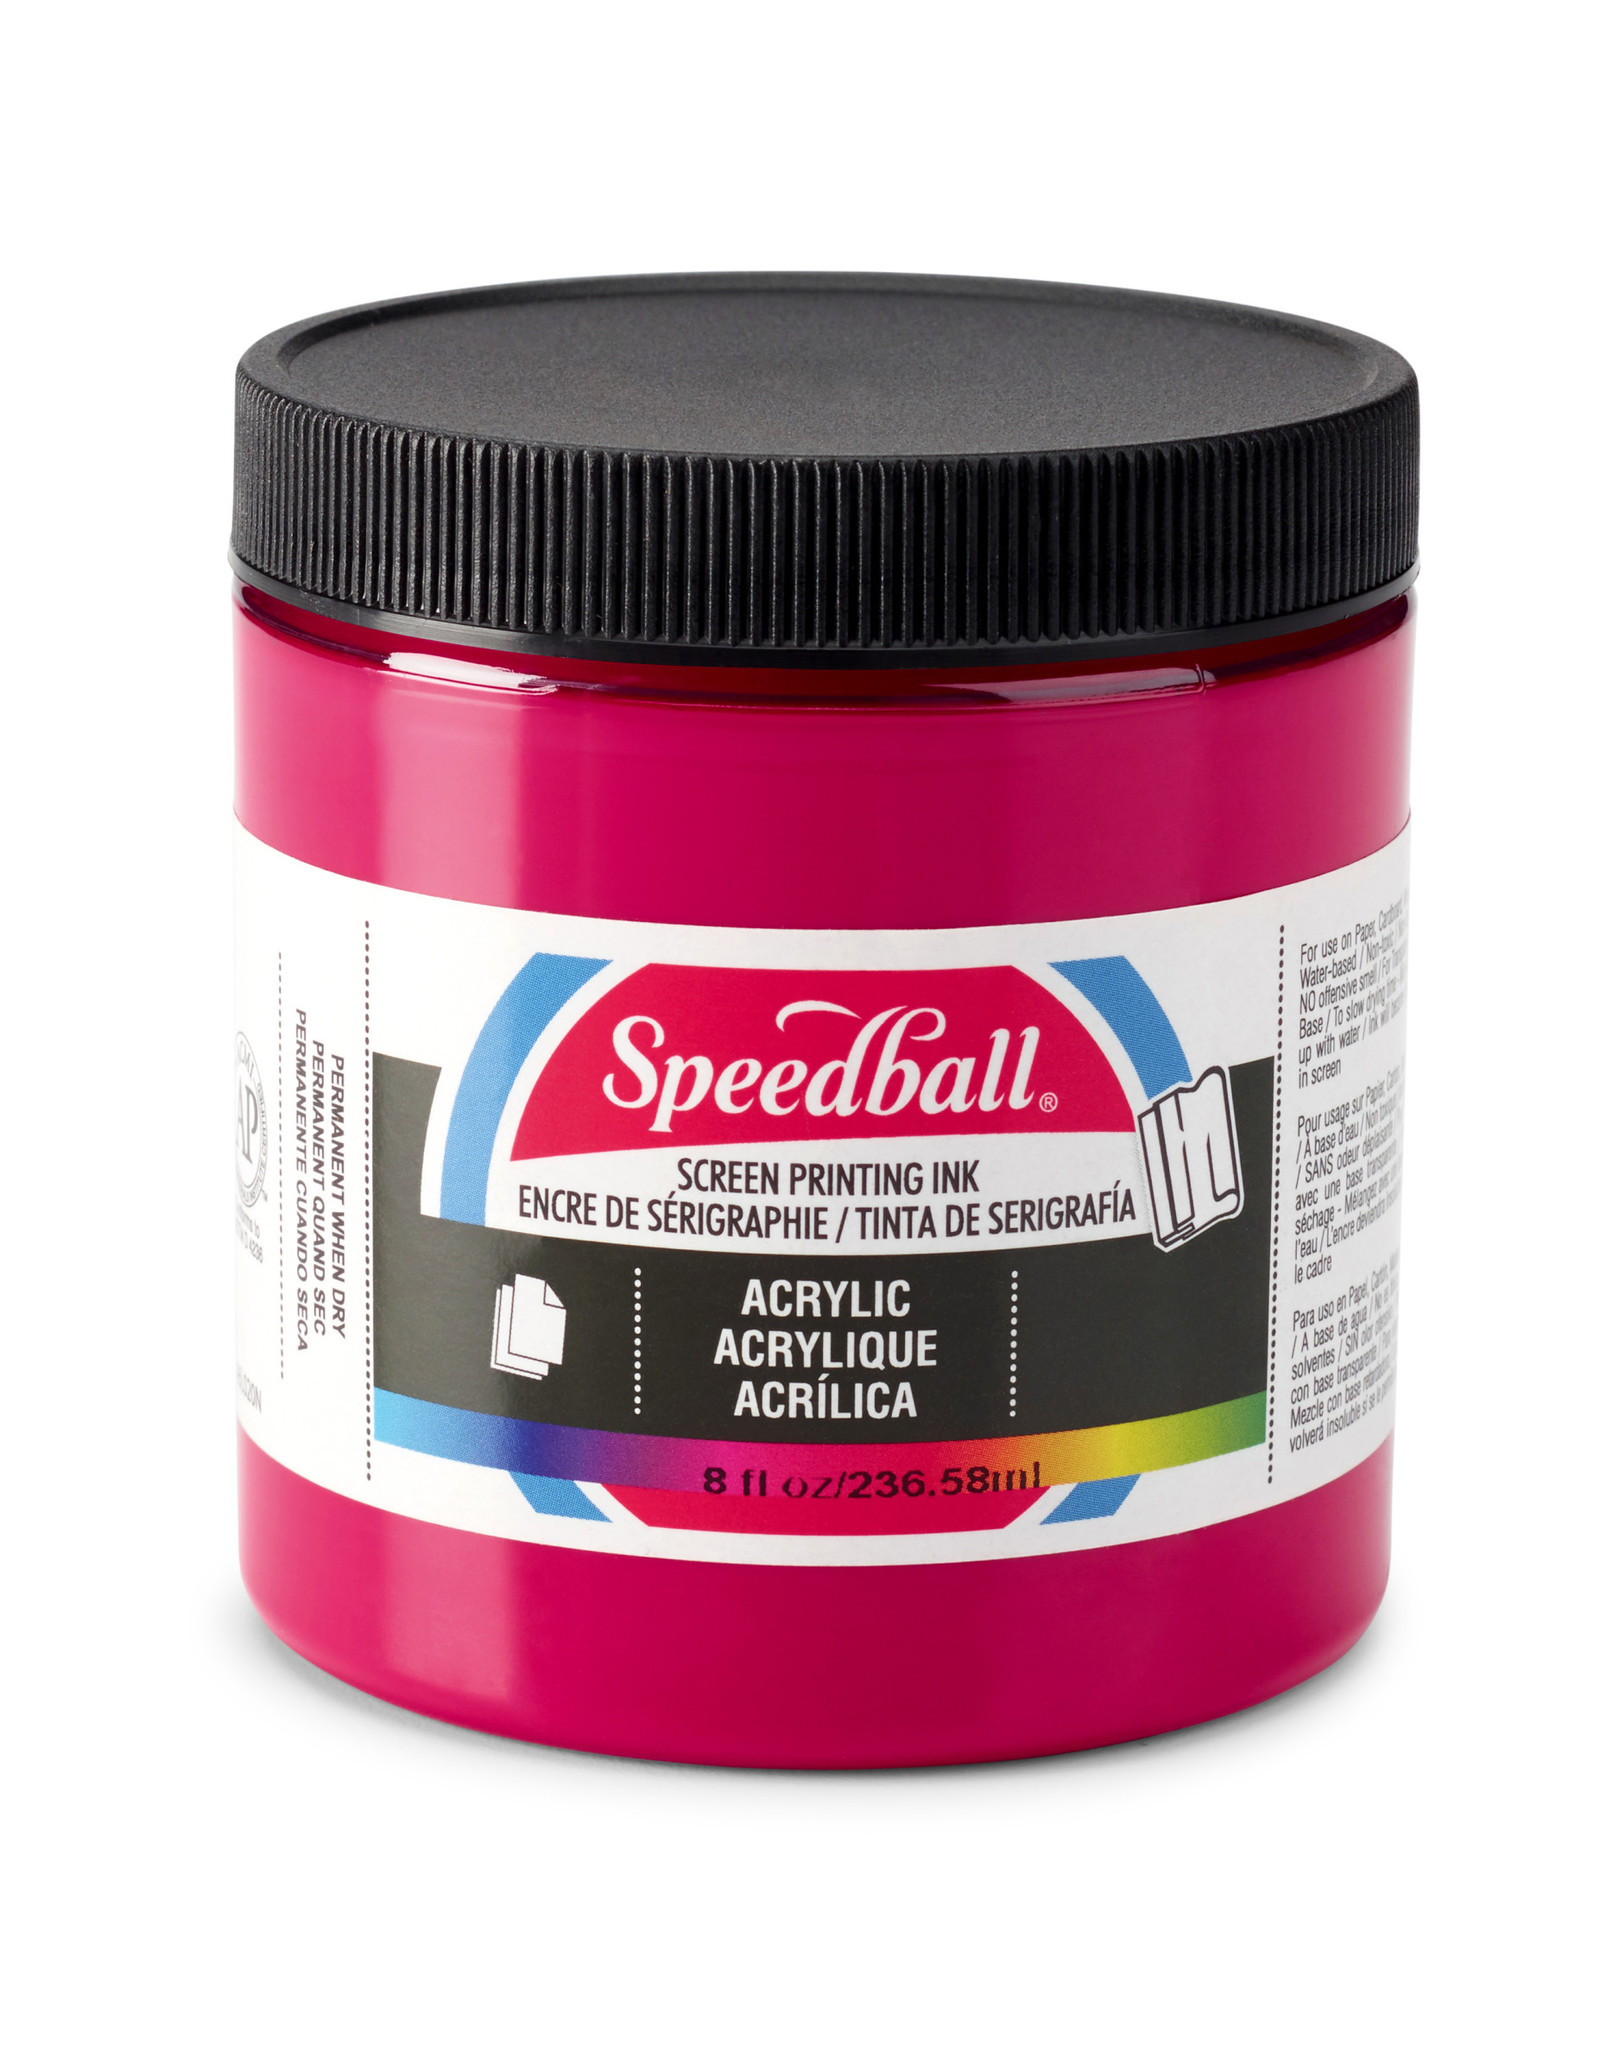 SPEEDBALL ART PRODUCTS Speedball Acrylic Screen Printing Ink, Process Magenta, 8oz